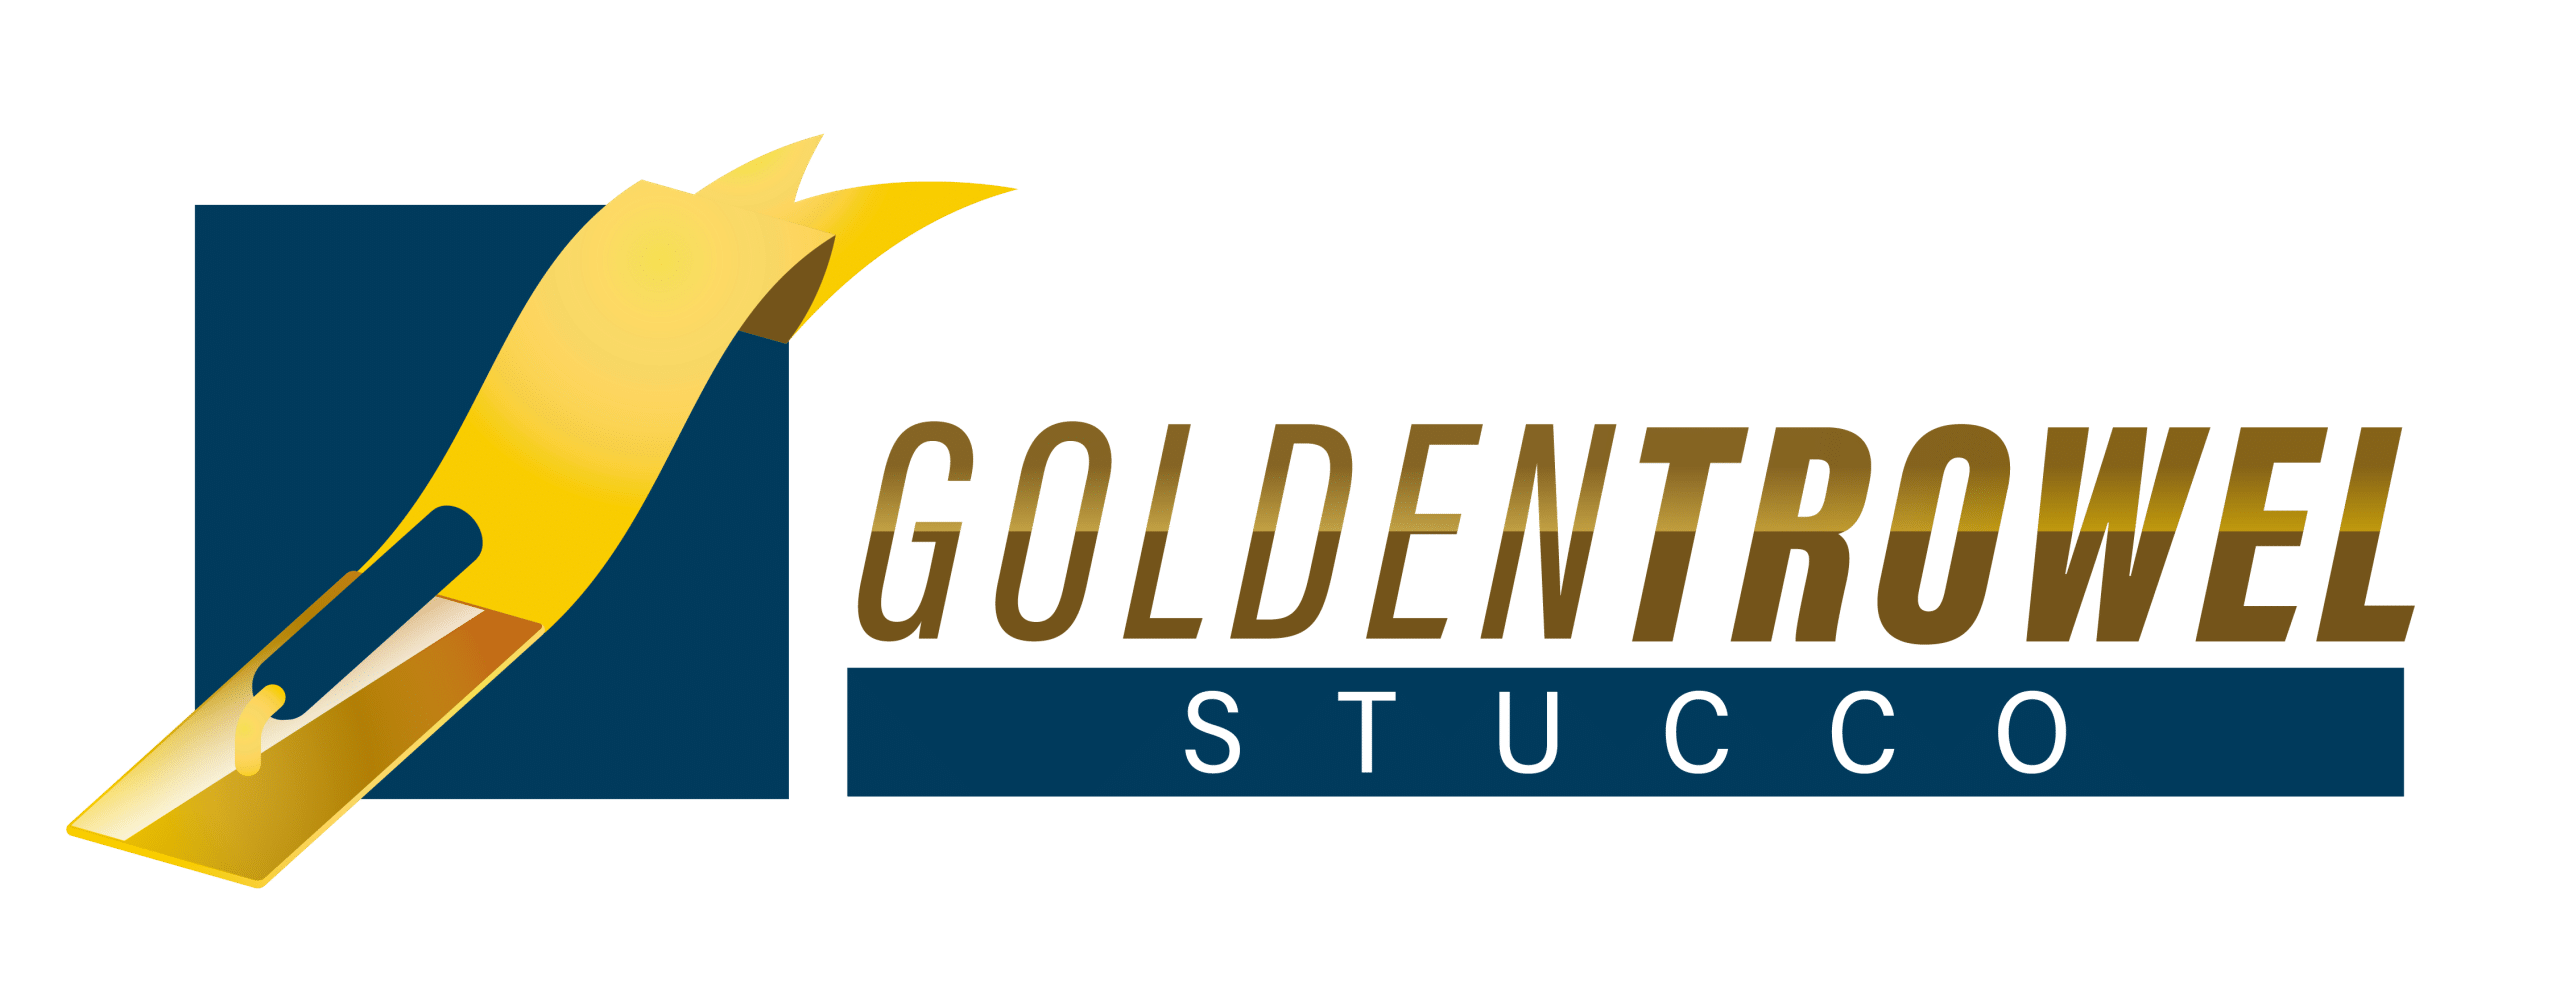 Golden Trowel Stucco Logo